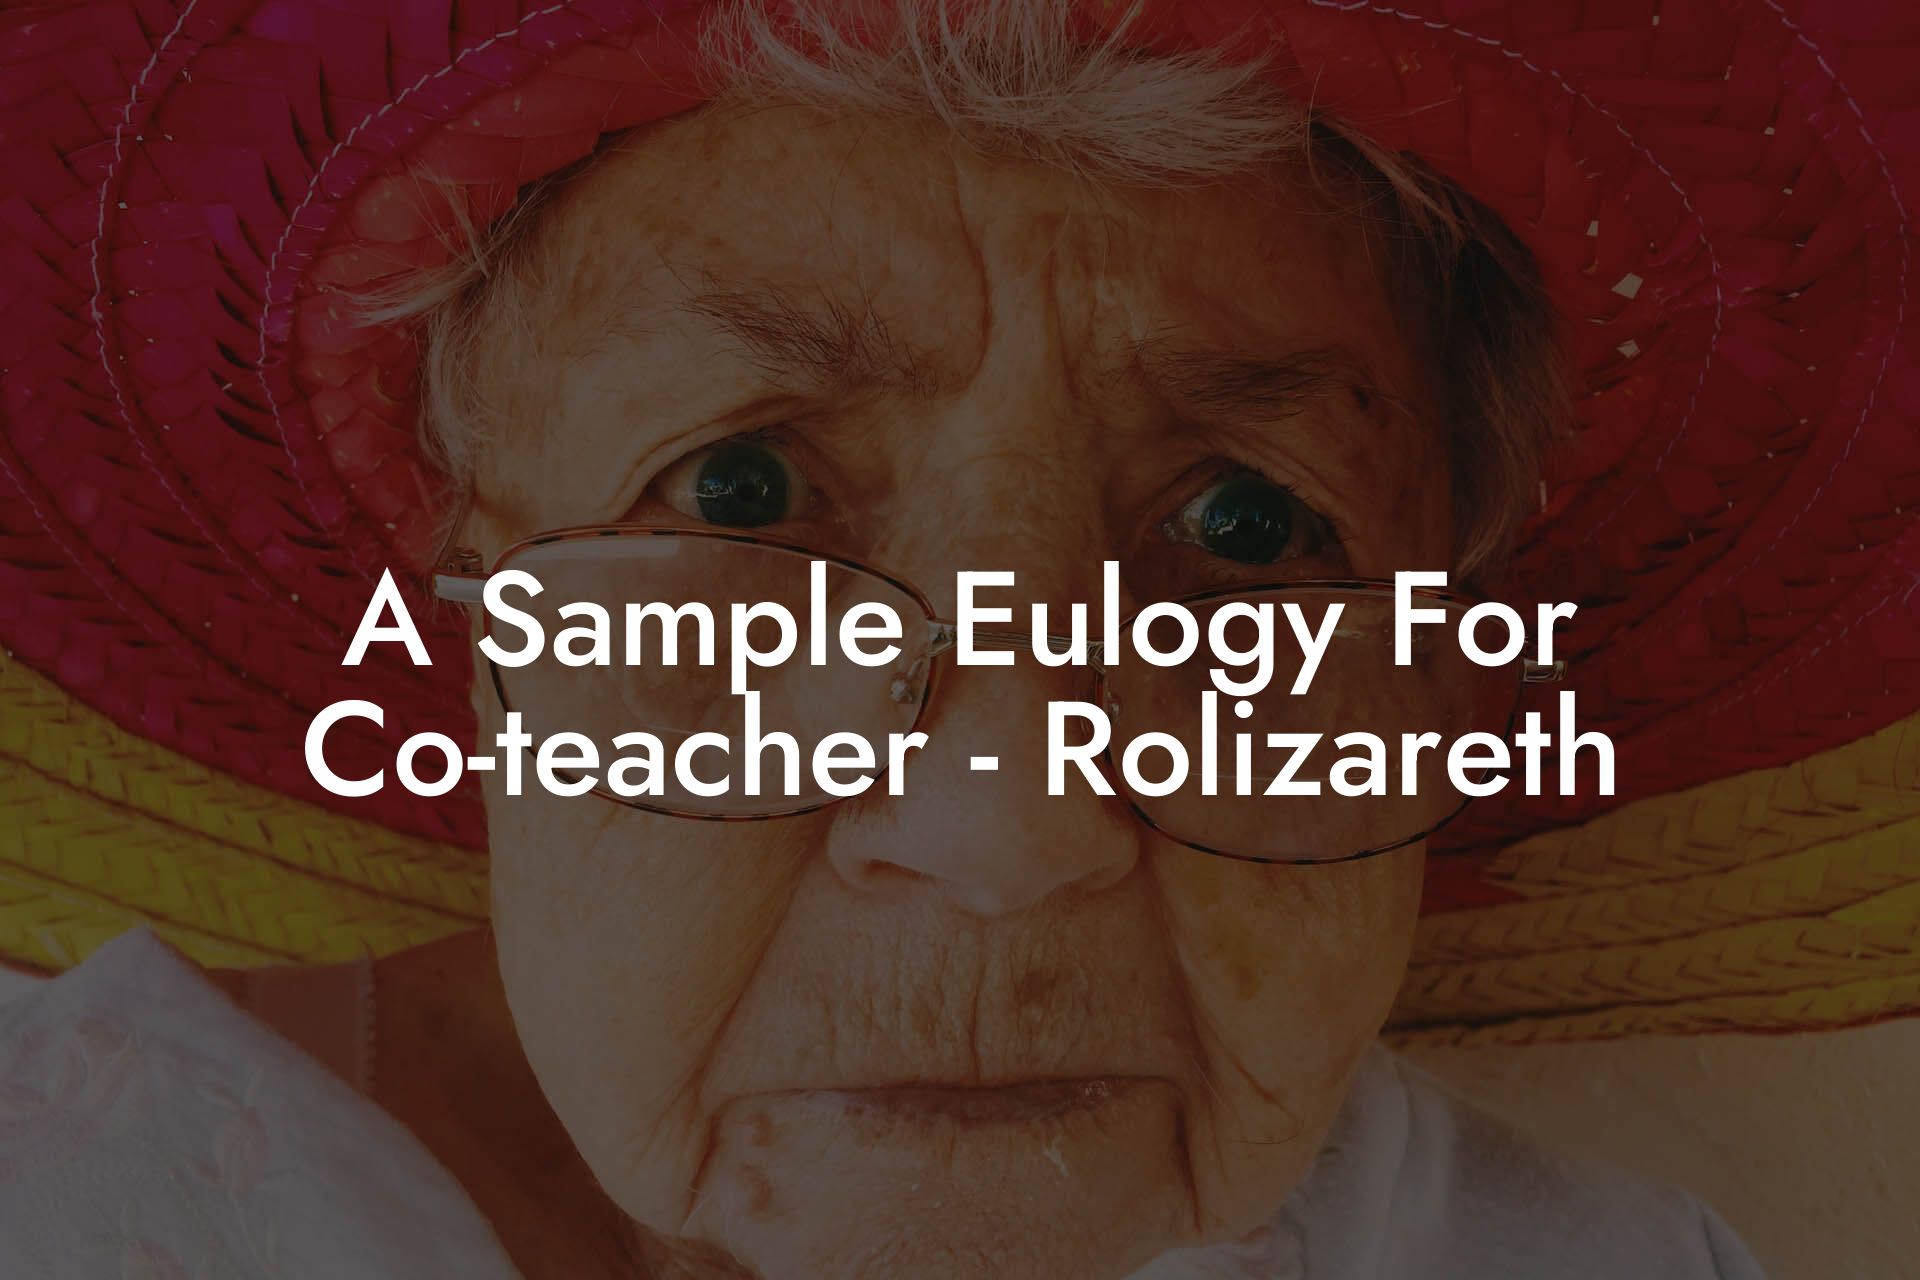 A Sample Eulogy For Co-teacher - Rolizareth